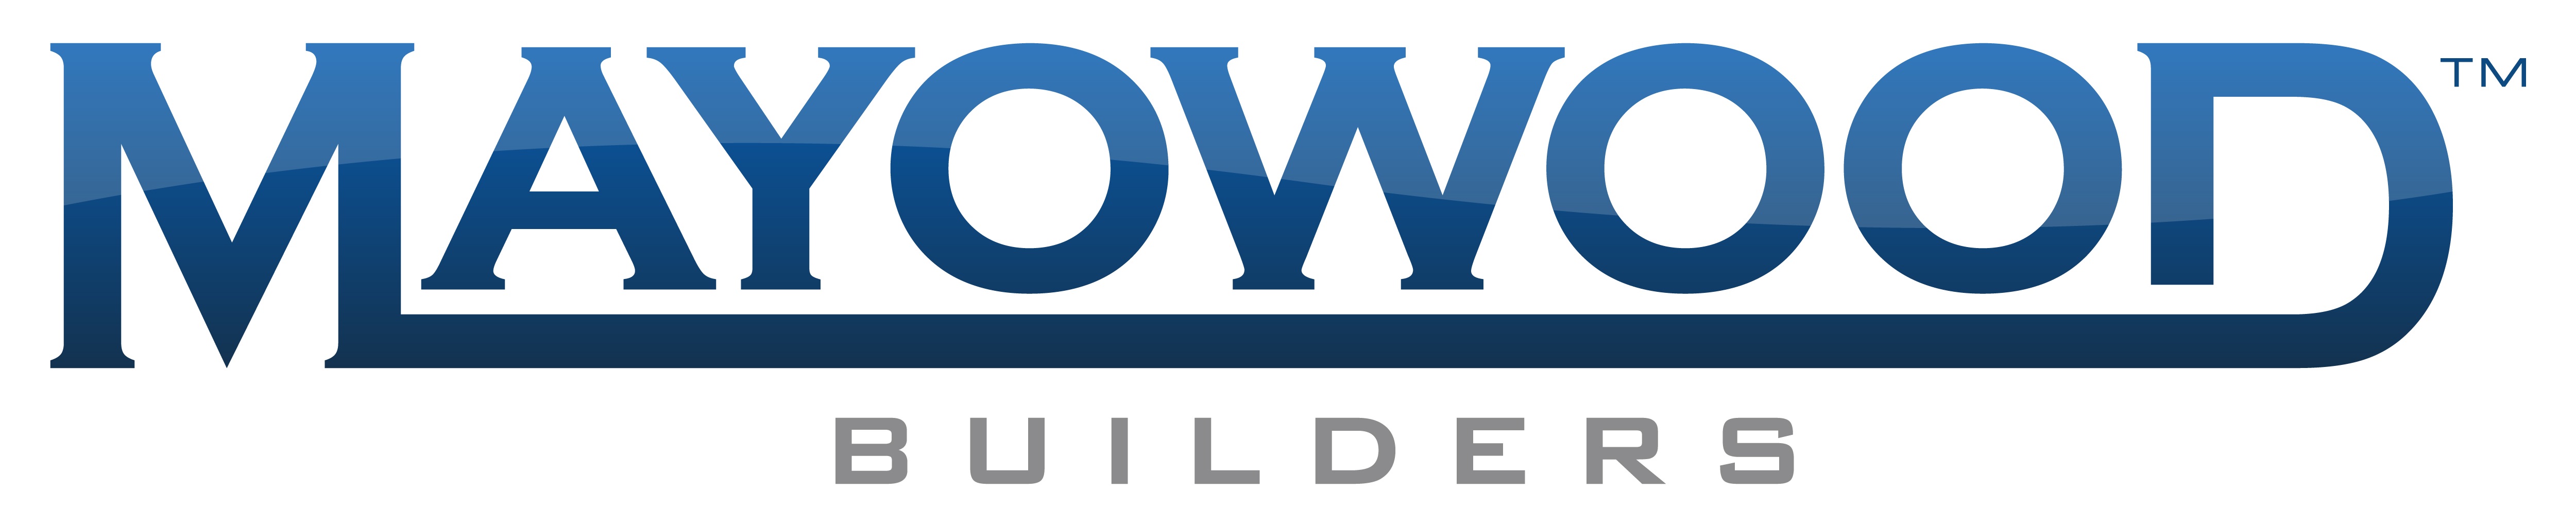 Mayowood Builders, LLC. logo